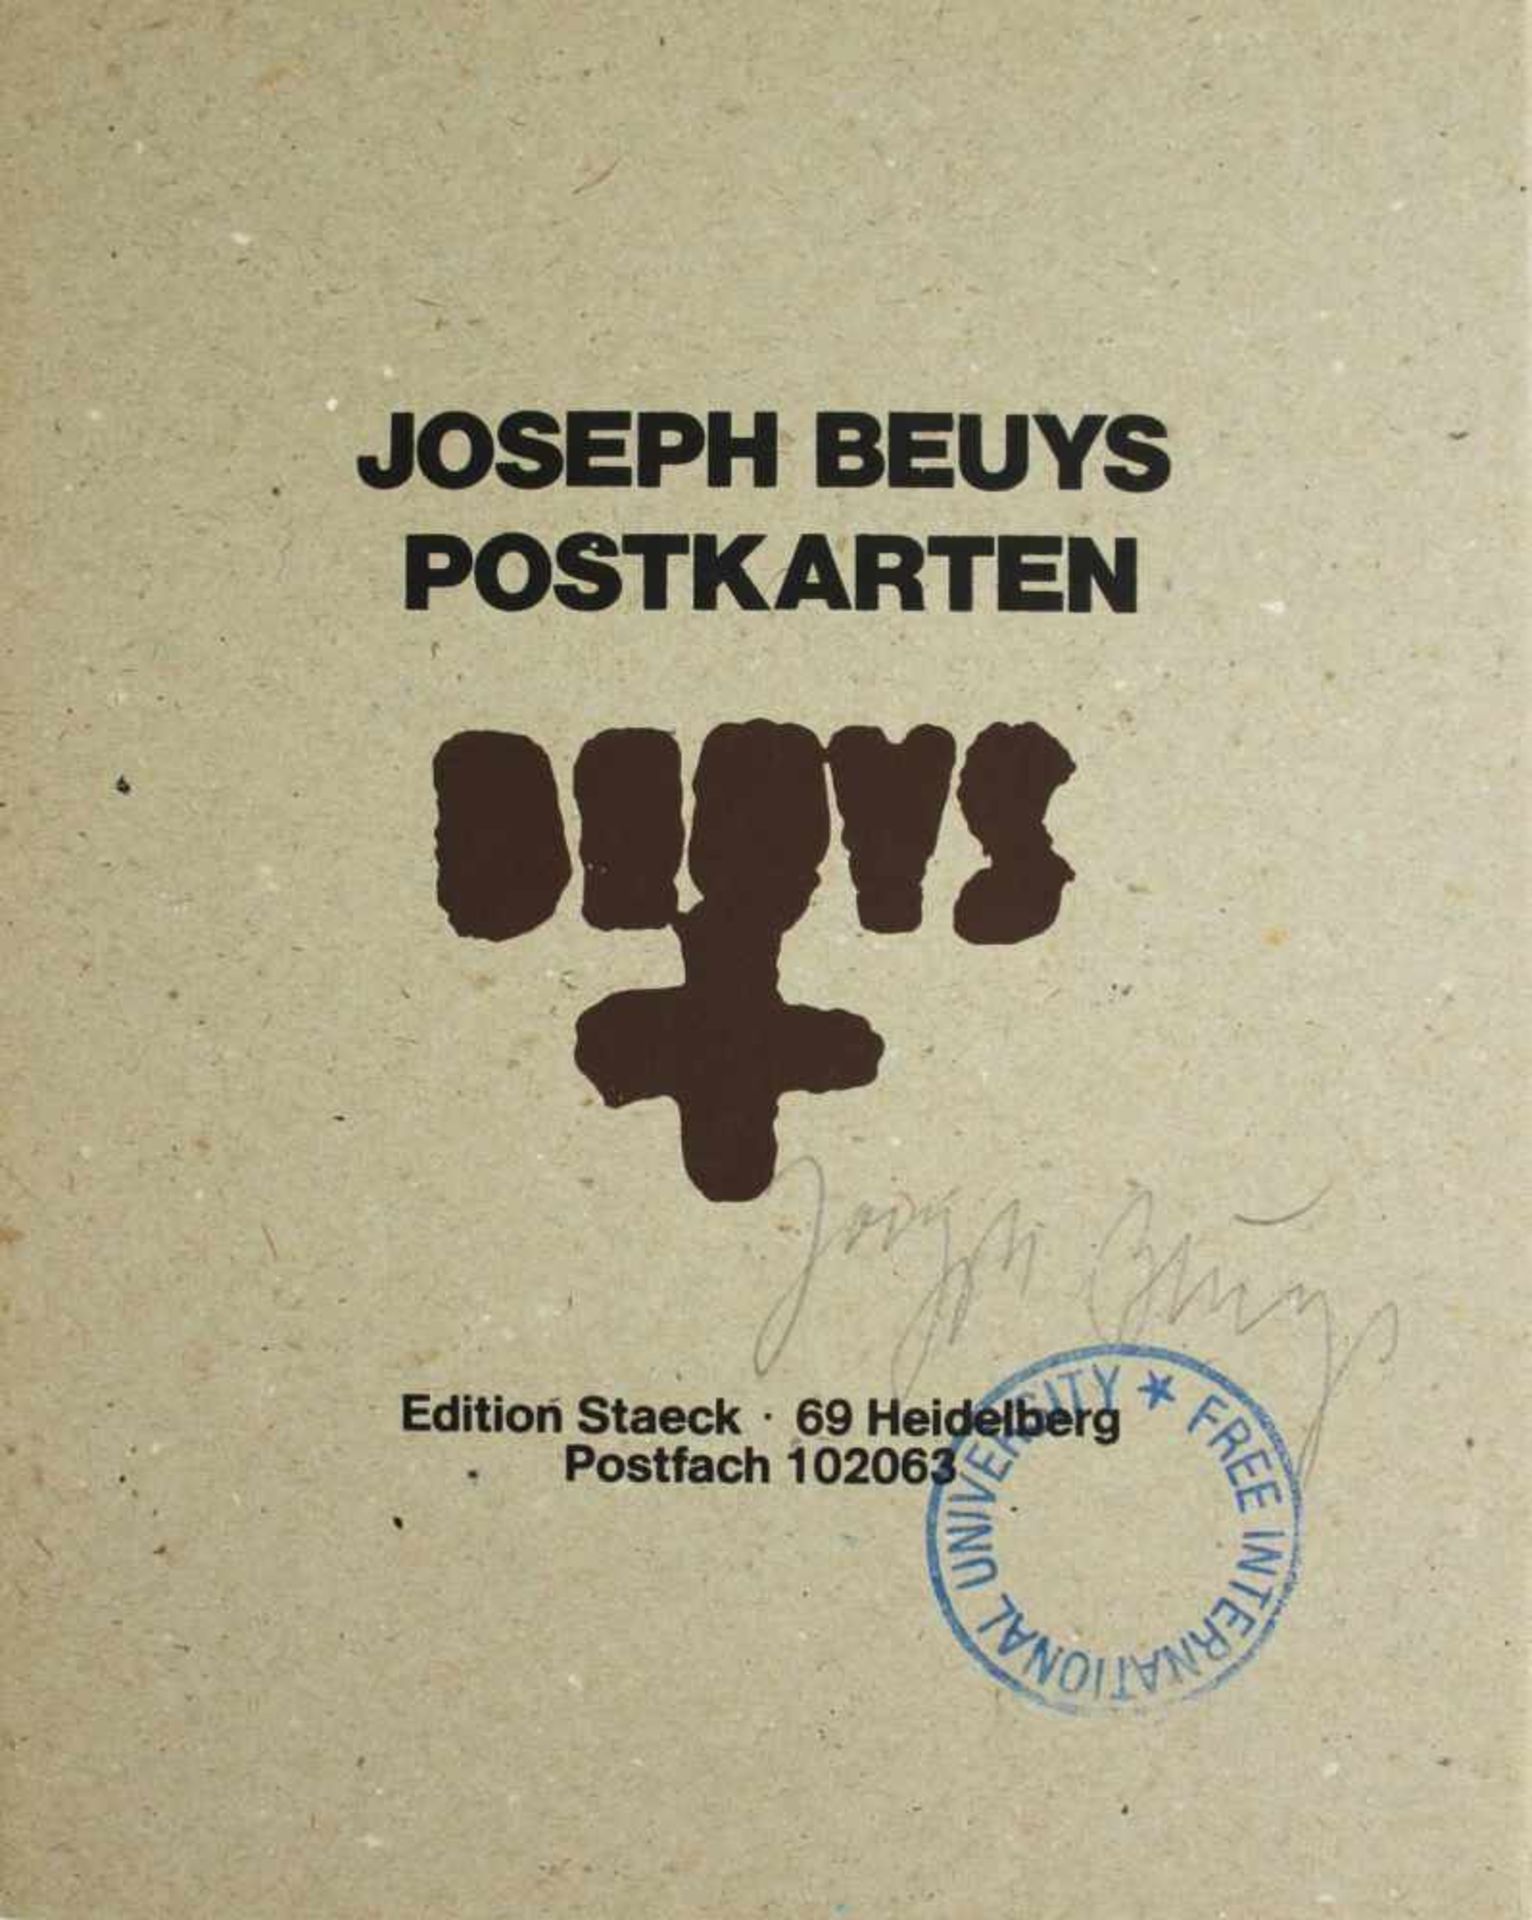 Joseph Beuys 1921 - 1986 Postkarten ca. 1986 Multiple Multiple auf festem Karton, handsigniert und